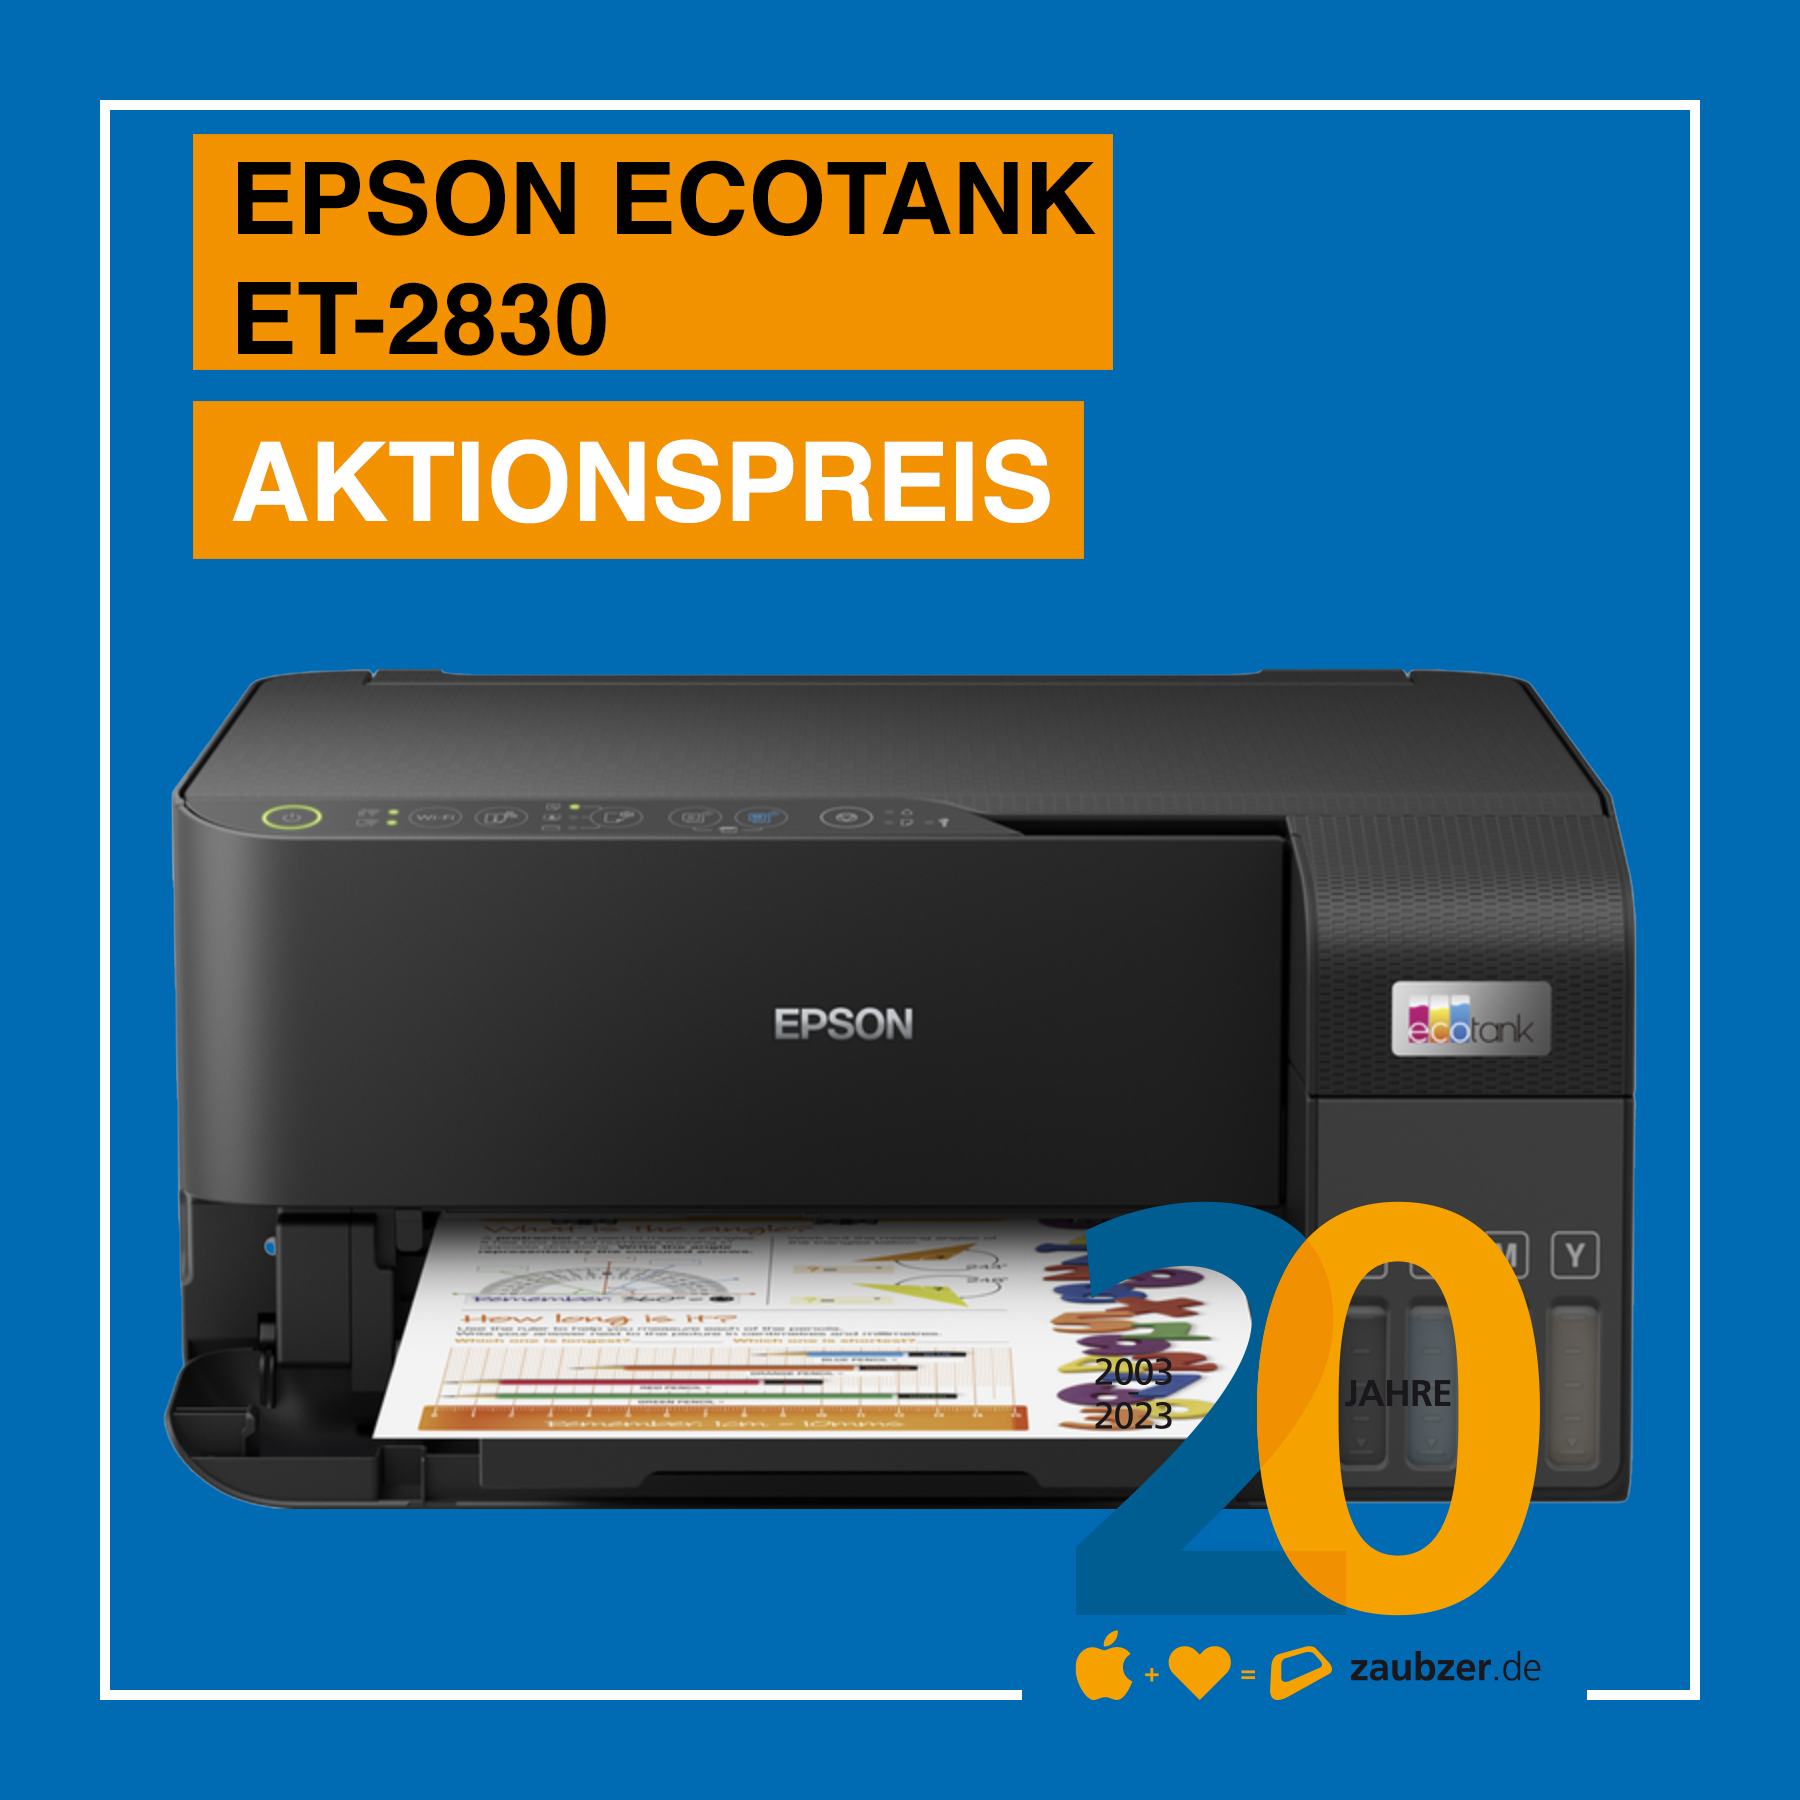 EPSON EcoTank ET-2830 - zaubzer.de - Mannheim